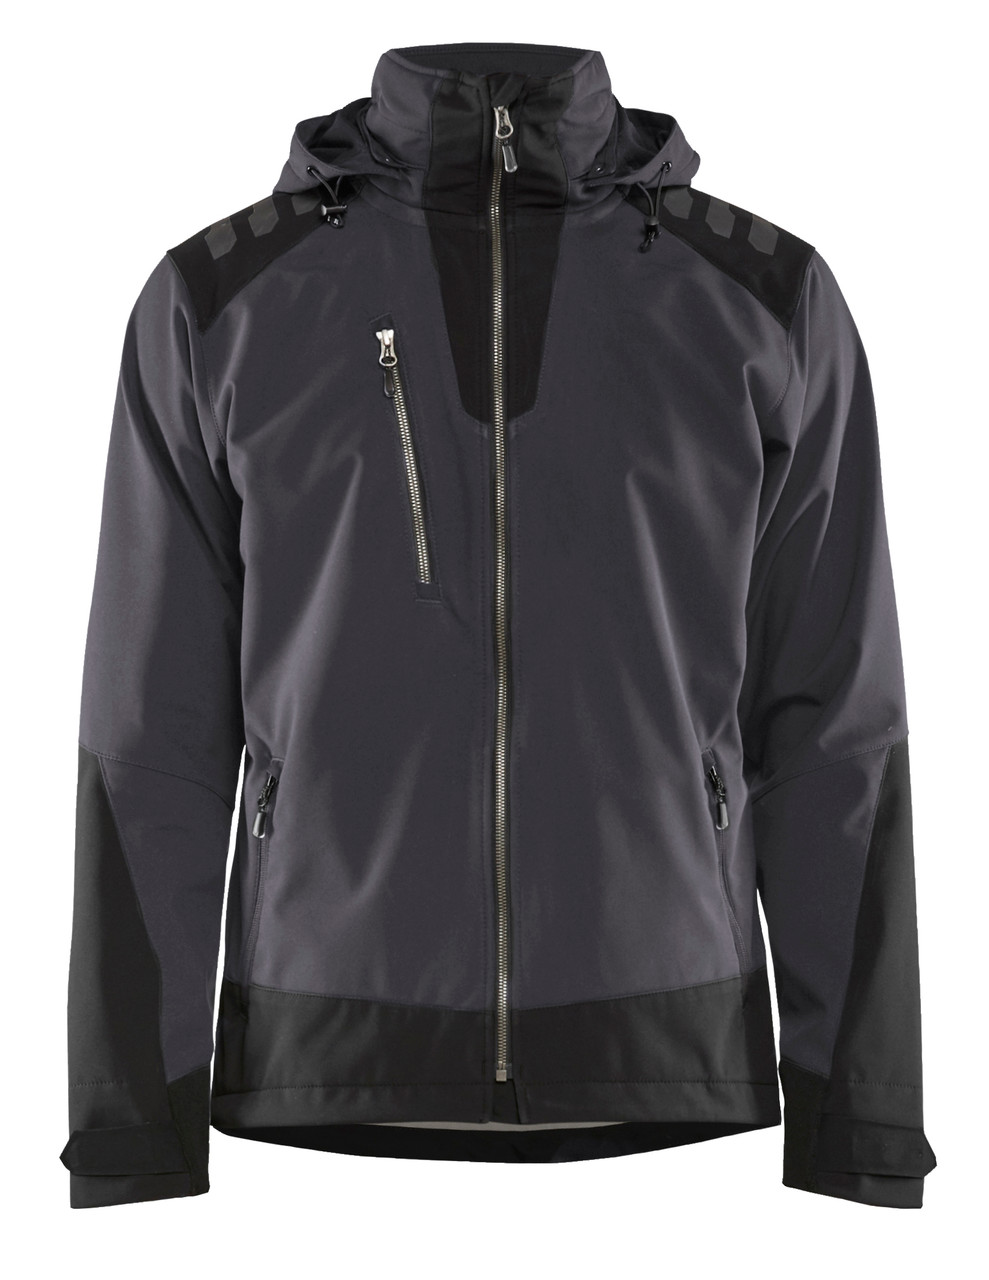 Mens Hiking Jacket  4749  - Dark Grey  Full Zip  Waterproof & Breathable for Outdoor Adventures.